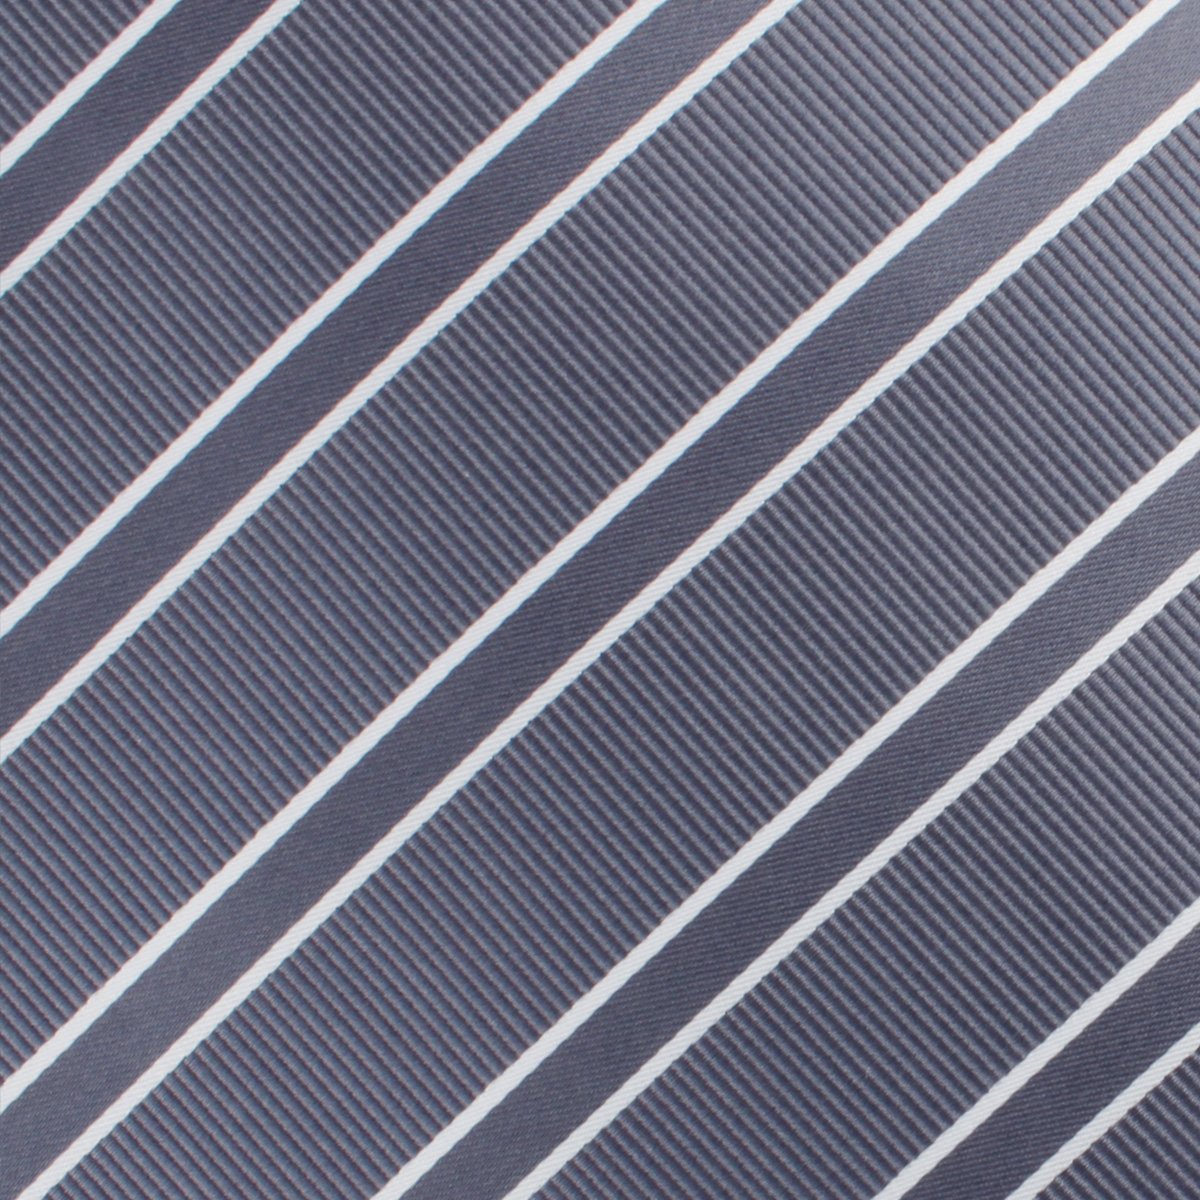 Graphite Charcoal Grey Double Stripe Pocket Square Fabric